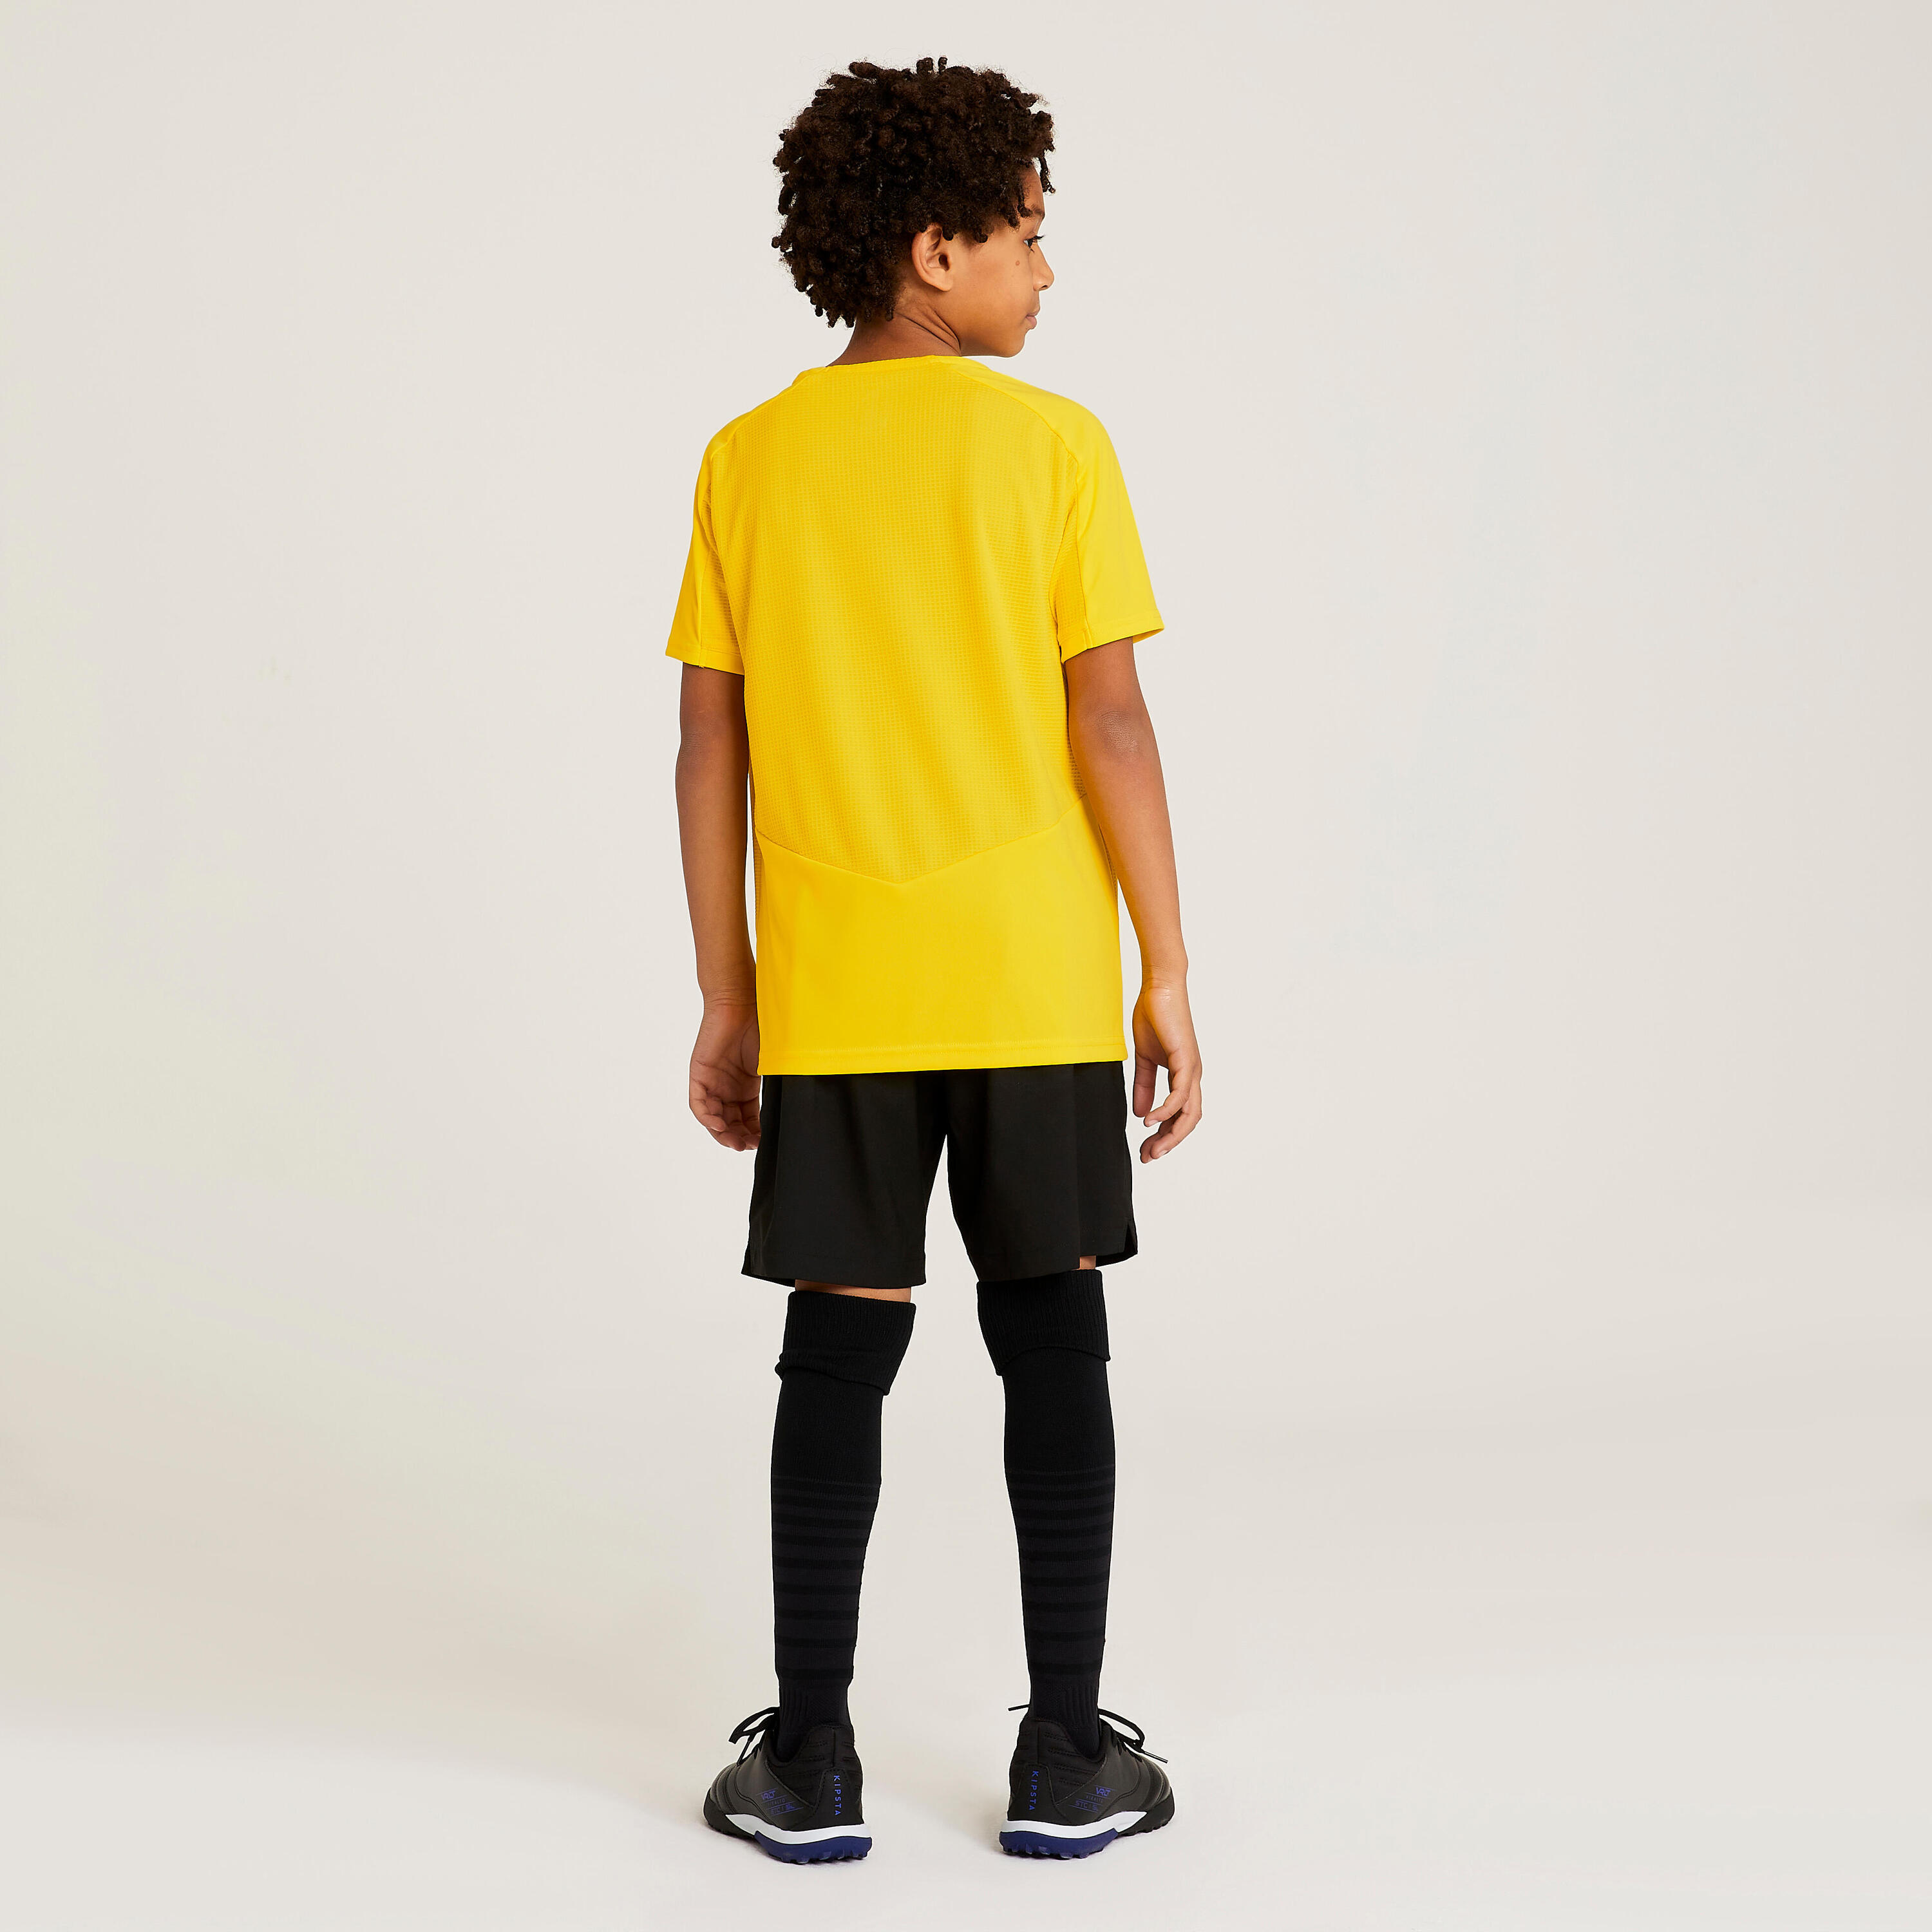 Refurbished Kids Short-Sleeved Football Shirt - B Grade 7/7